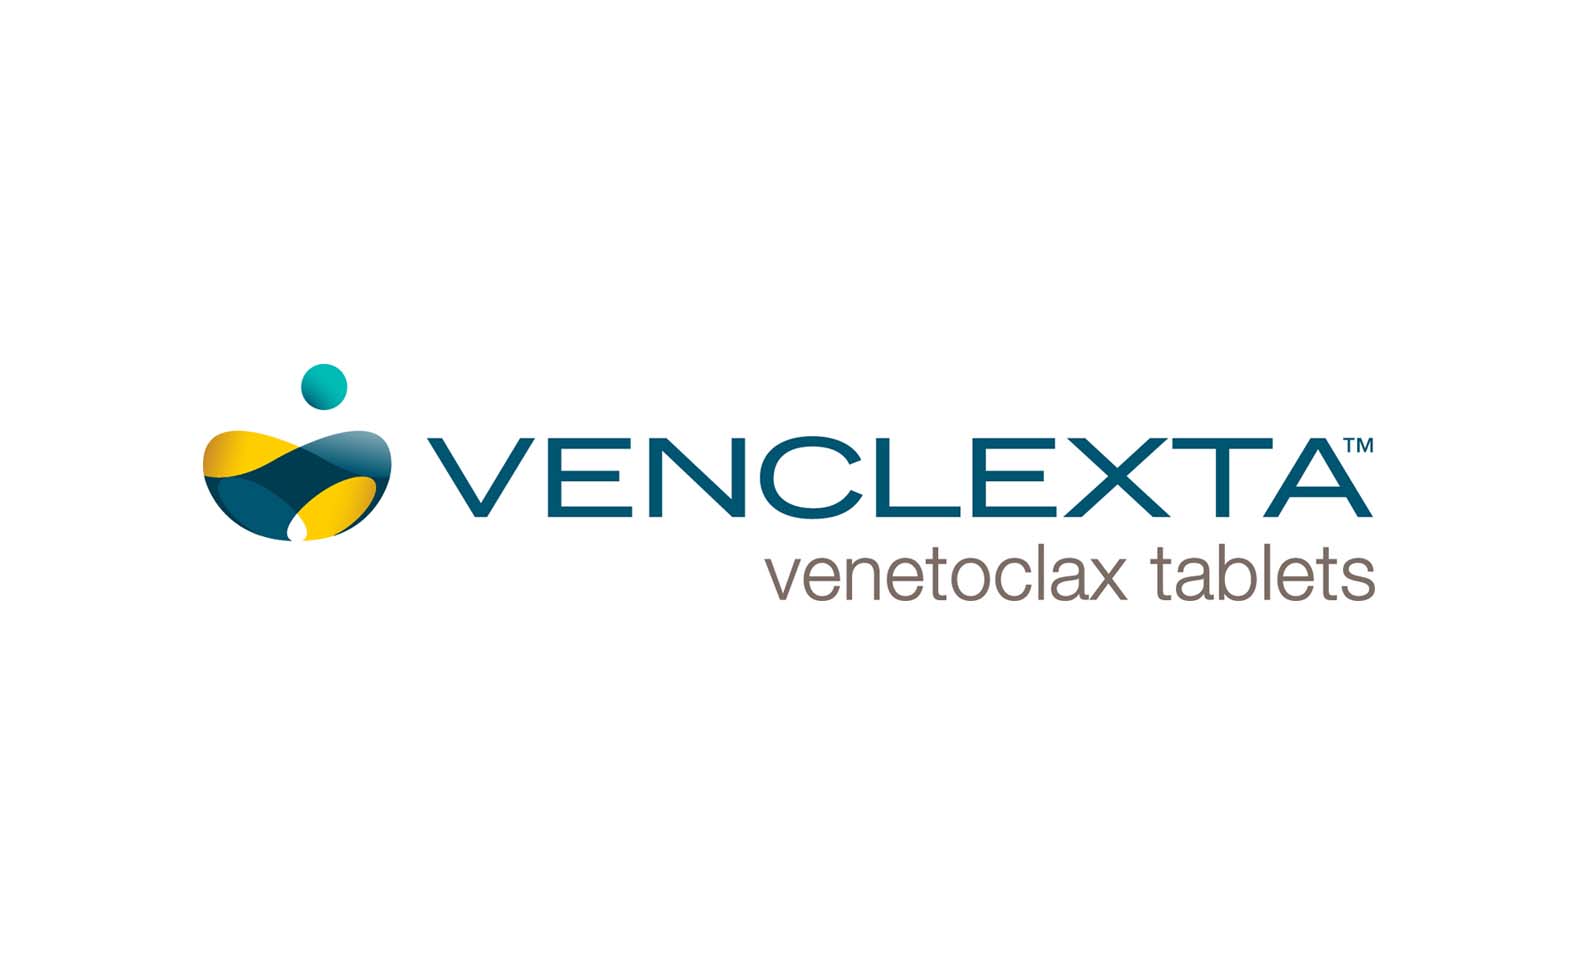 abbvie-receives-fda-accelerated-approval-of-venclexta-venetoclax